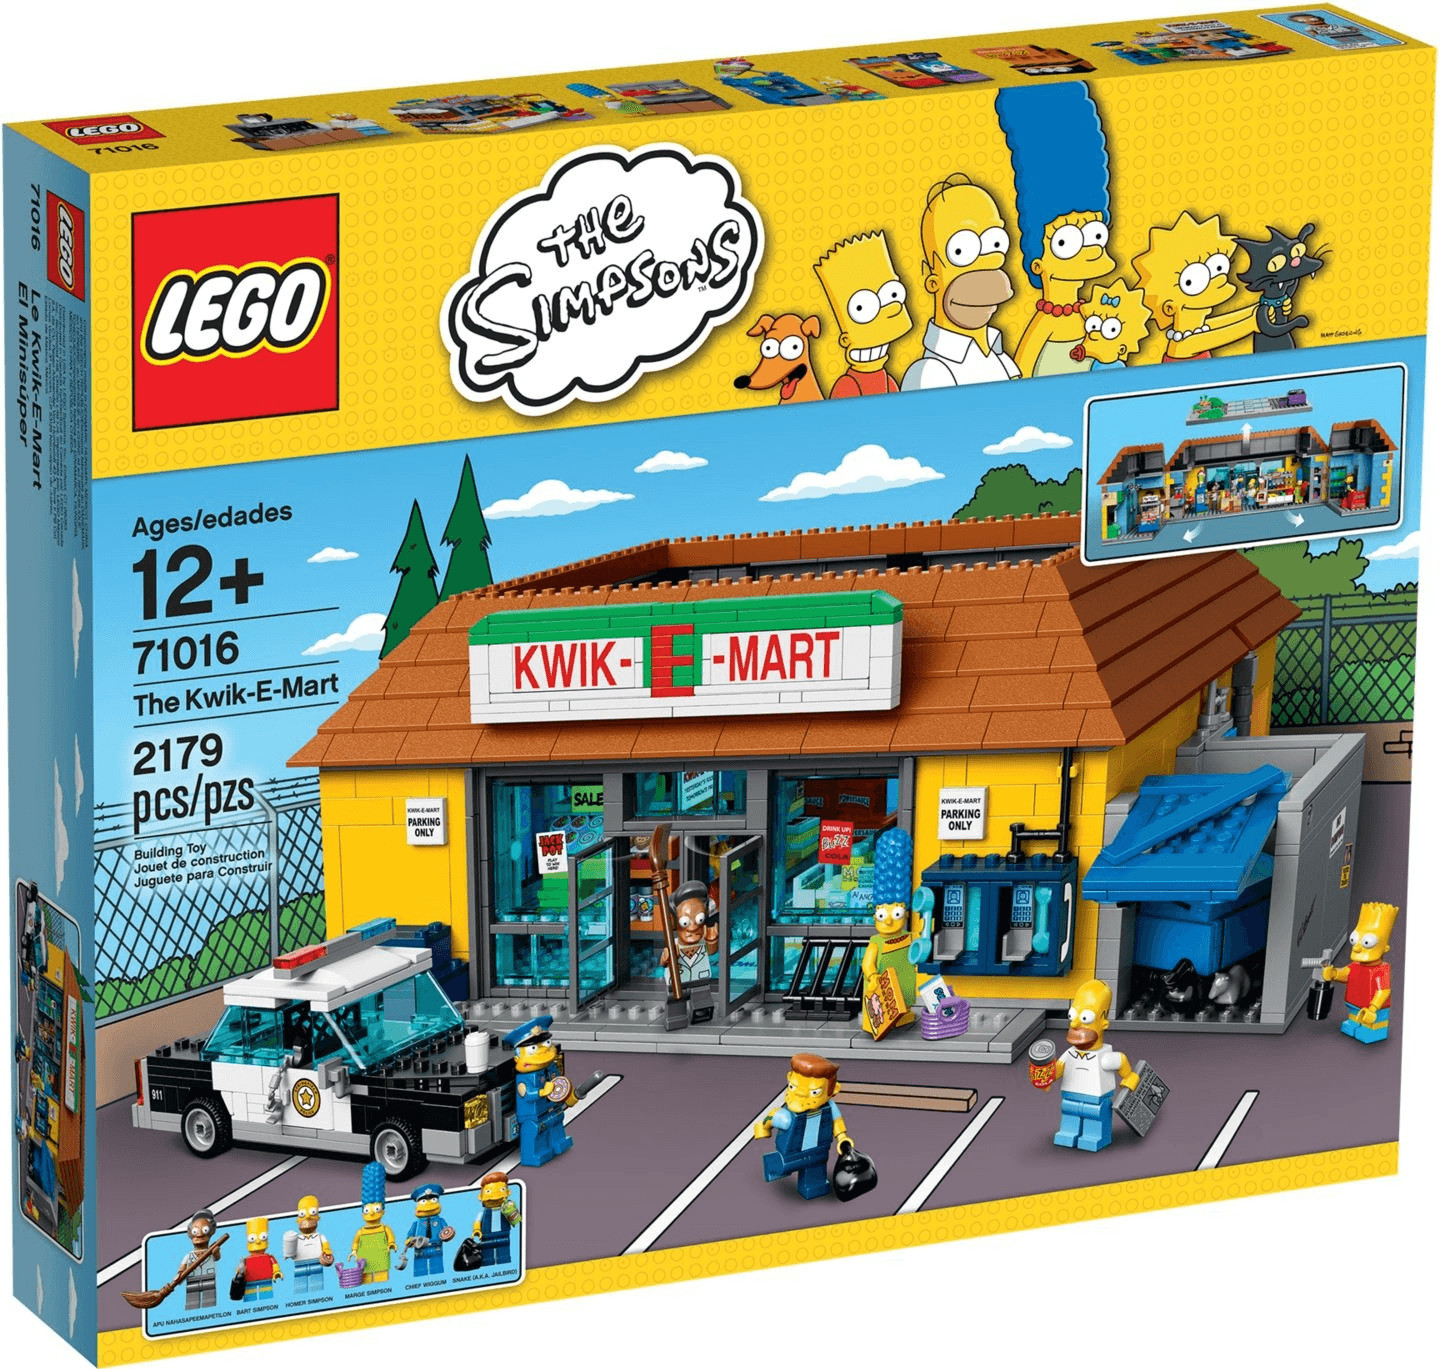 Resmi LEGO 71016 - Kwik-E-Mart